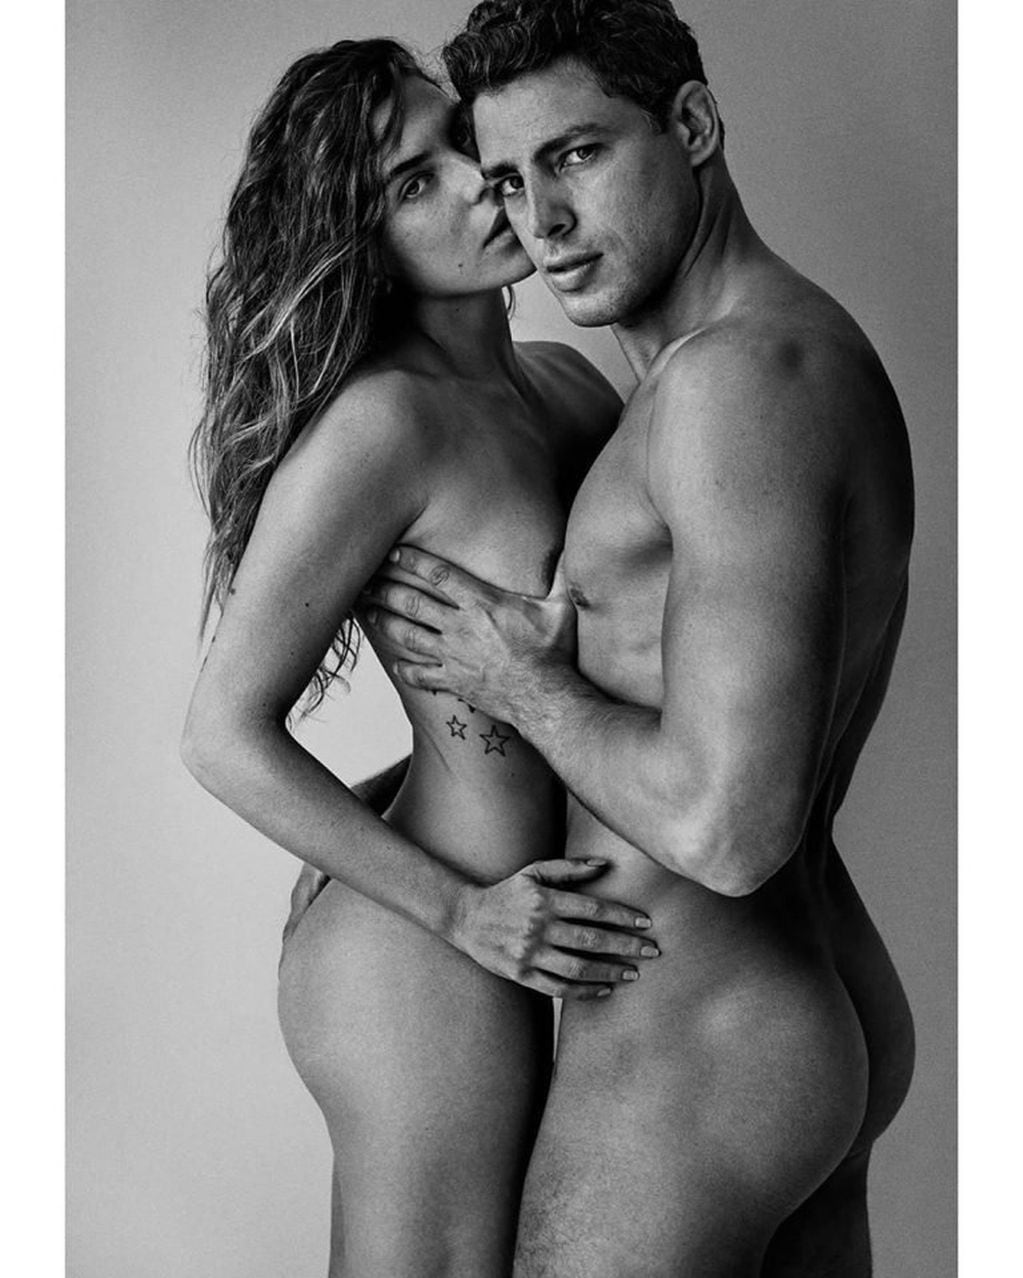 Jorgito de Avenida Brasil posó desnudo junto a su novia y causó furor (Foto: Instagram/cauareymond)